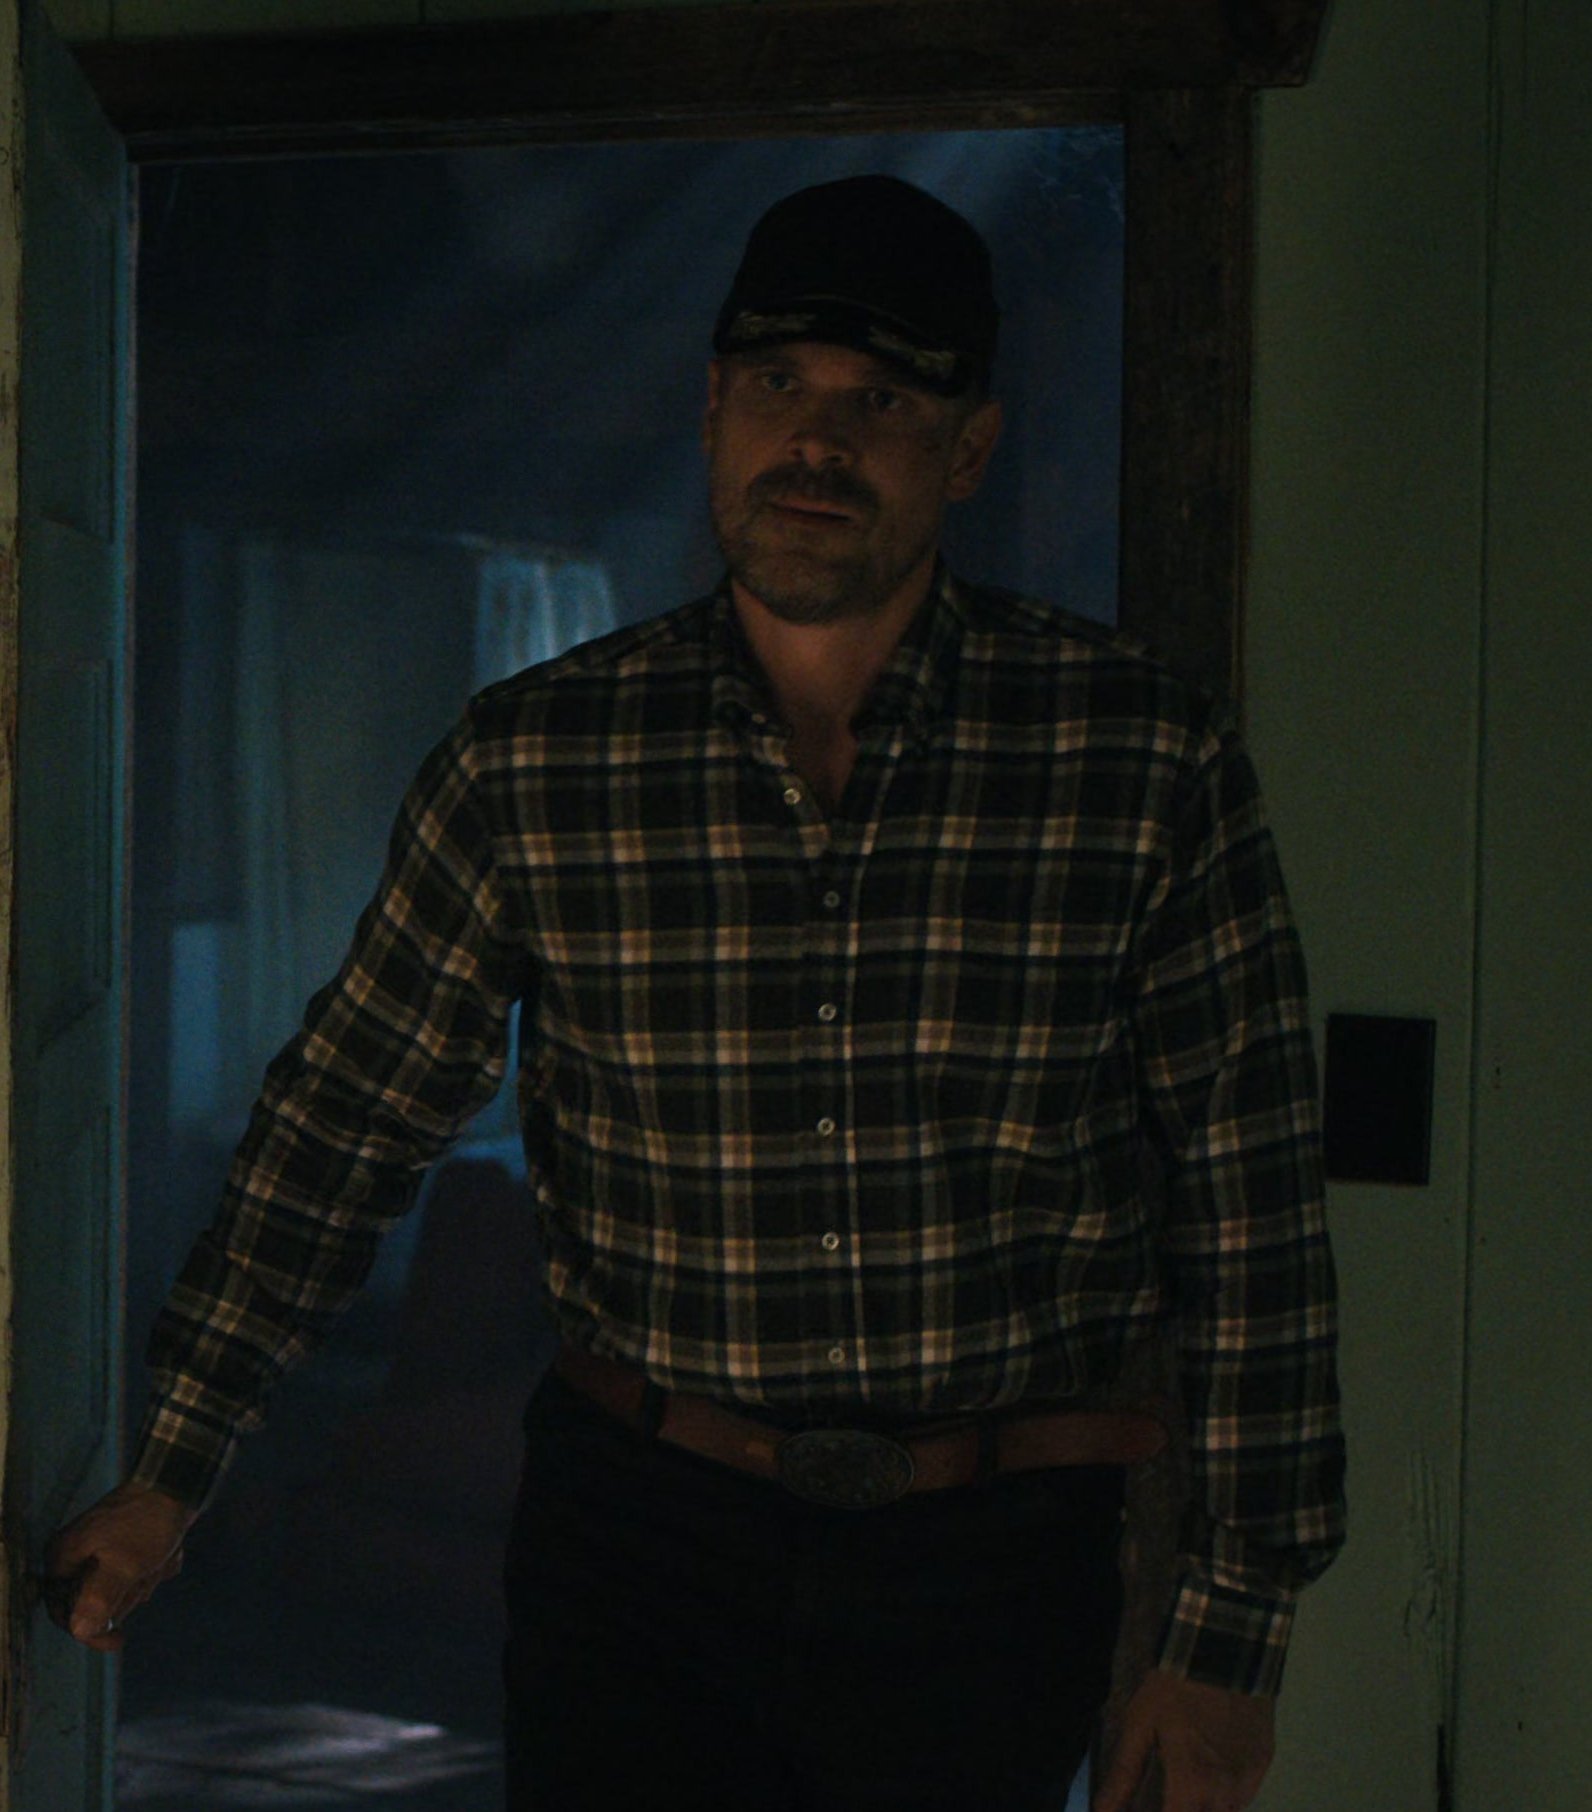 Worn on Stranger Things TV Show - Plaid Long Sleeve Shirt Worn by David Harbour as Jim Hopper